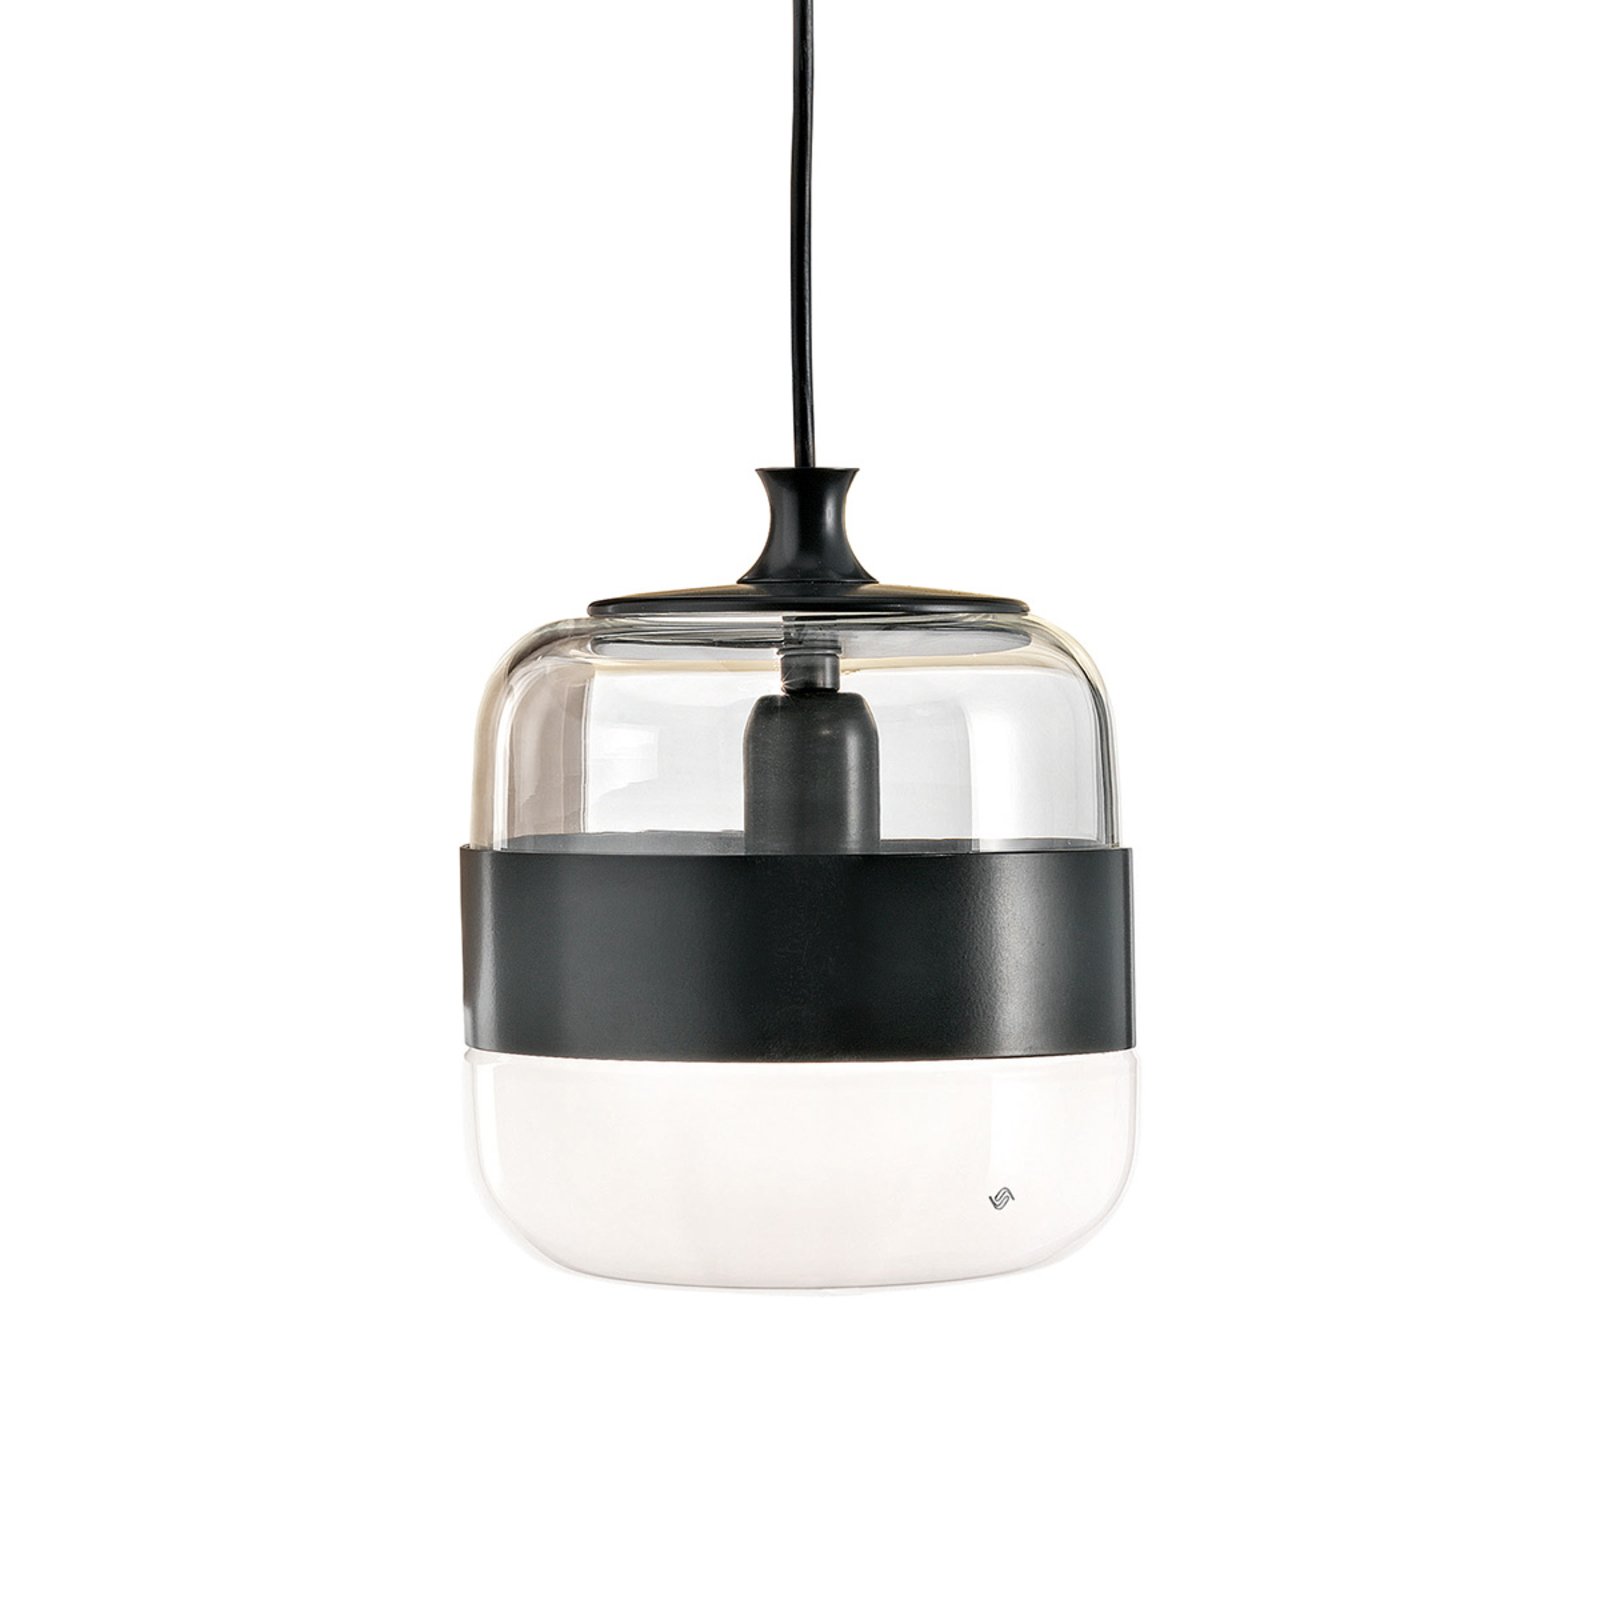 Viseća lampa Futura, Murano staklo, crno/bijela 20cm